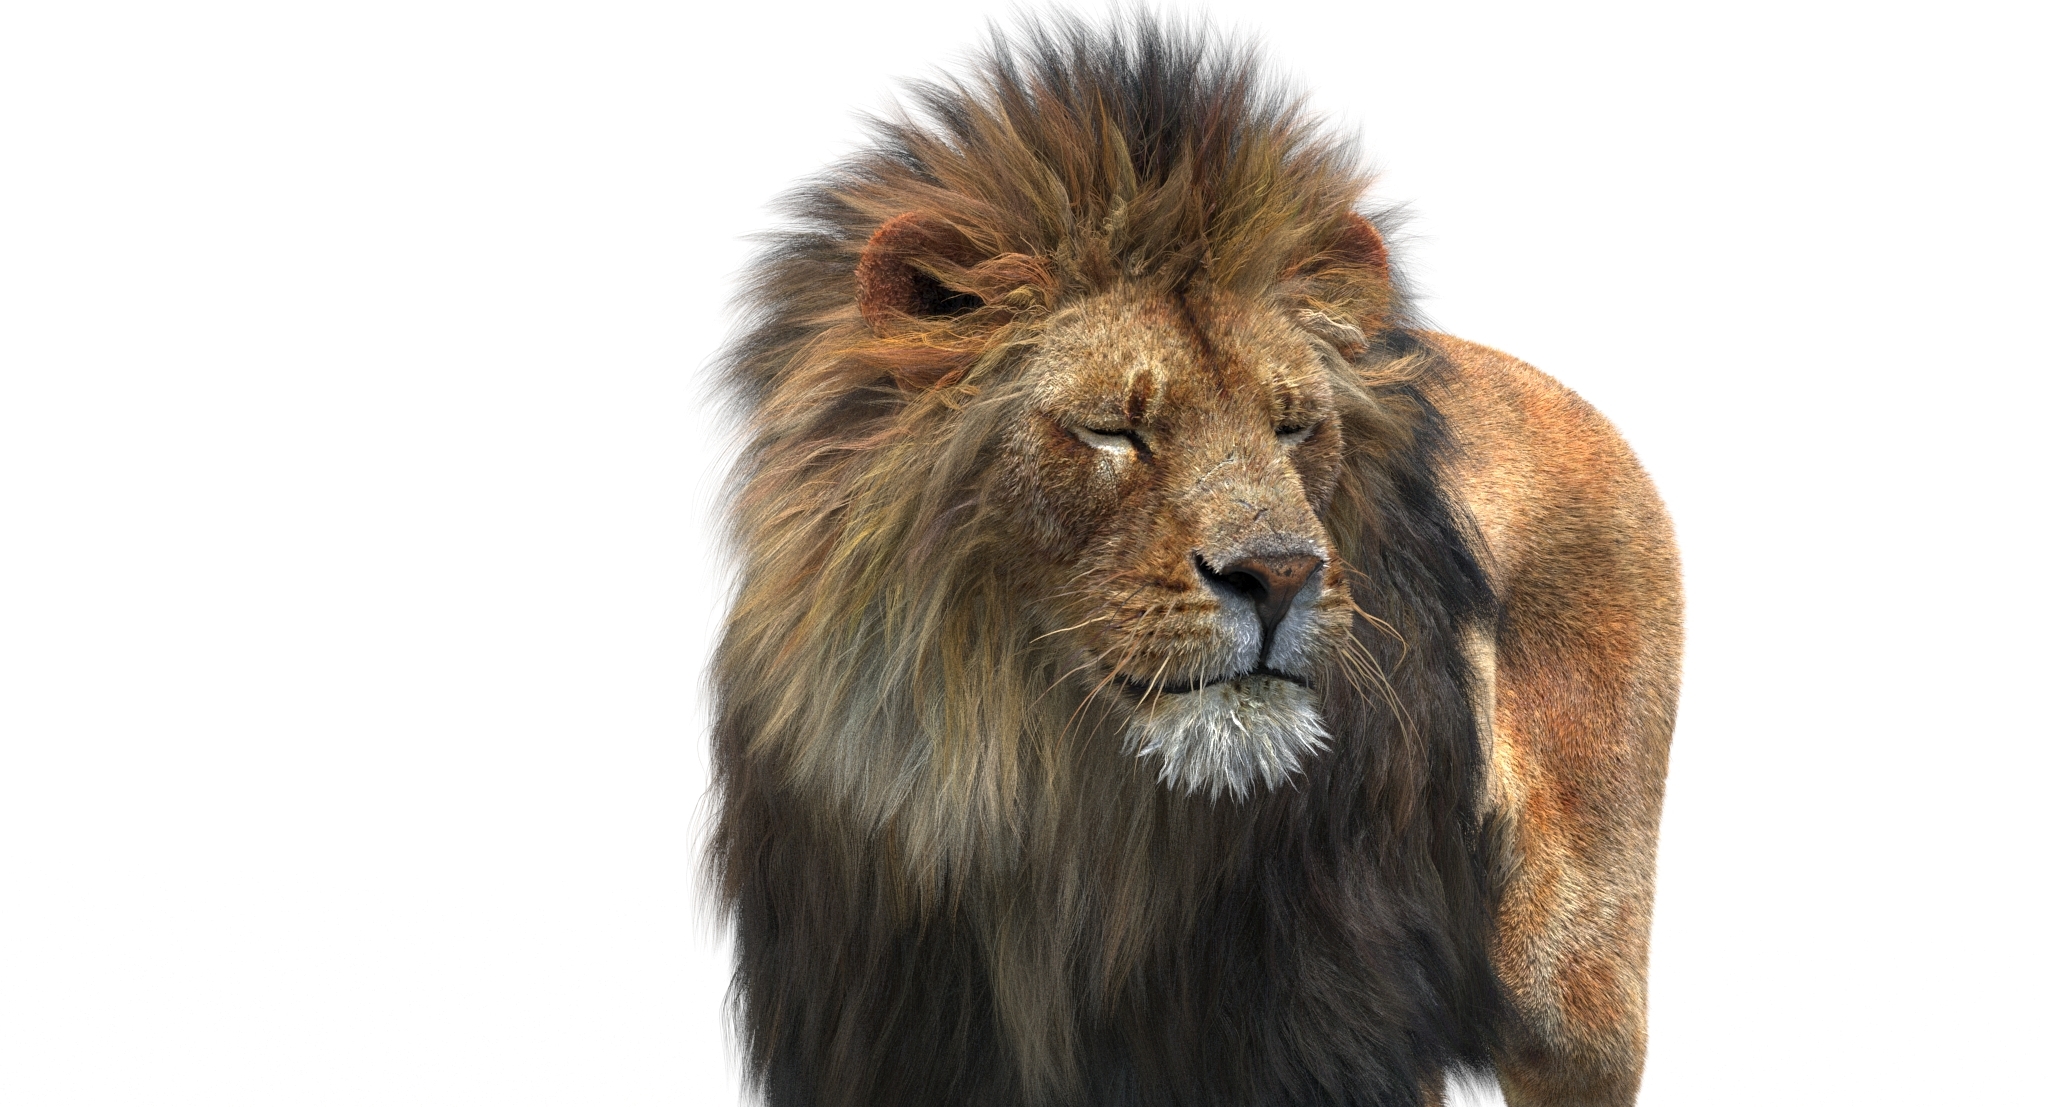 lion 2 fur rigged 3d obj